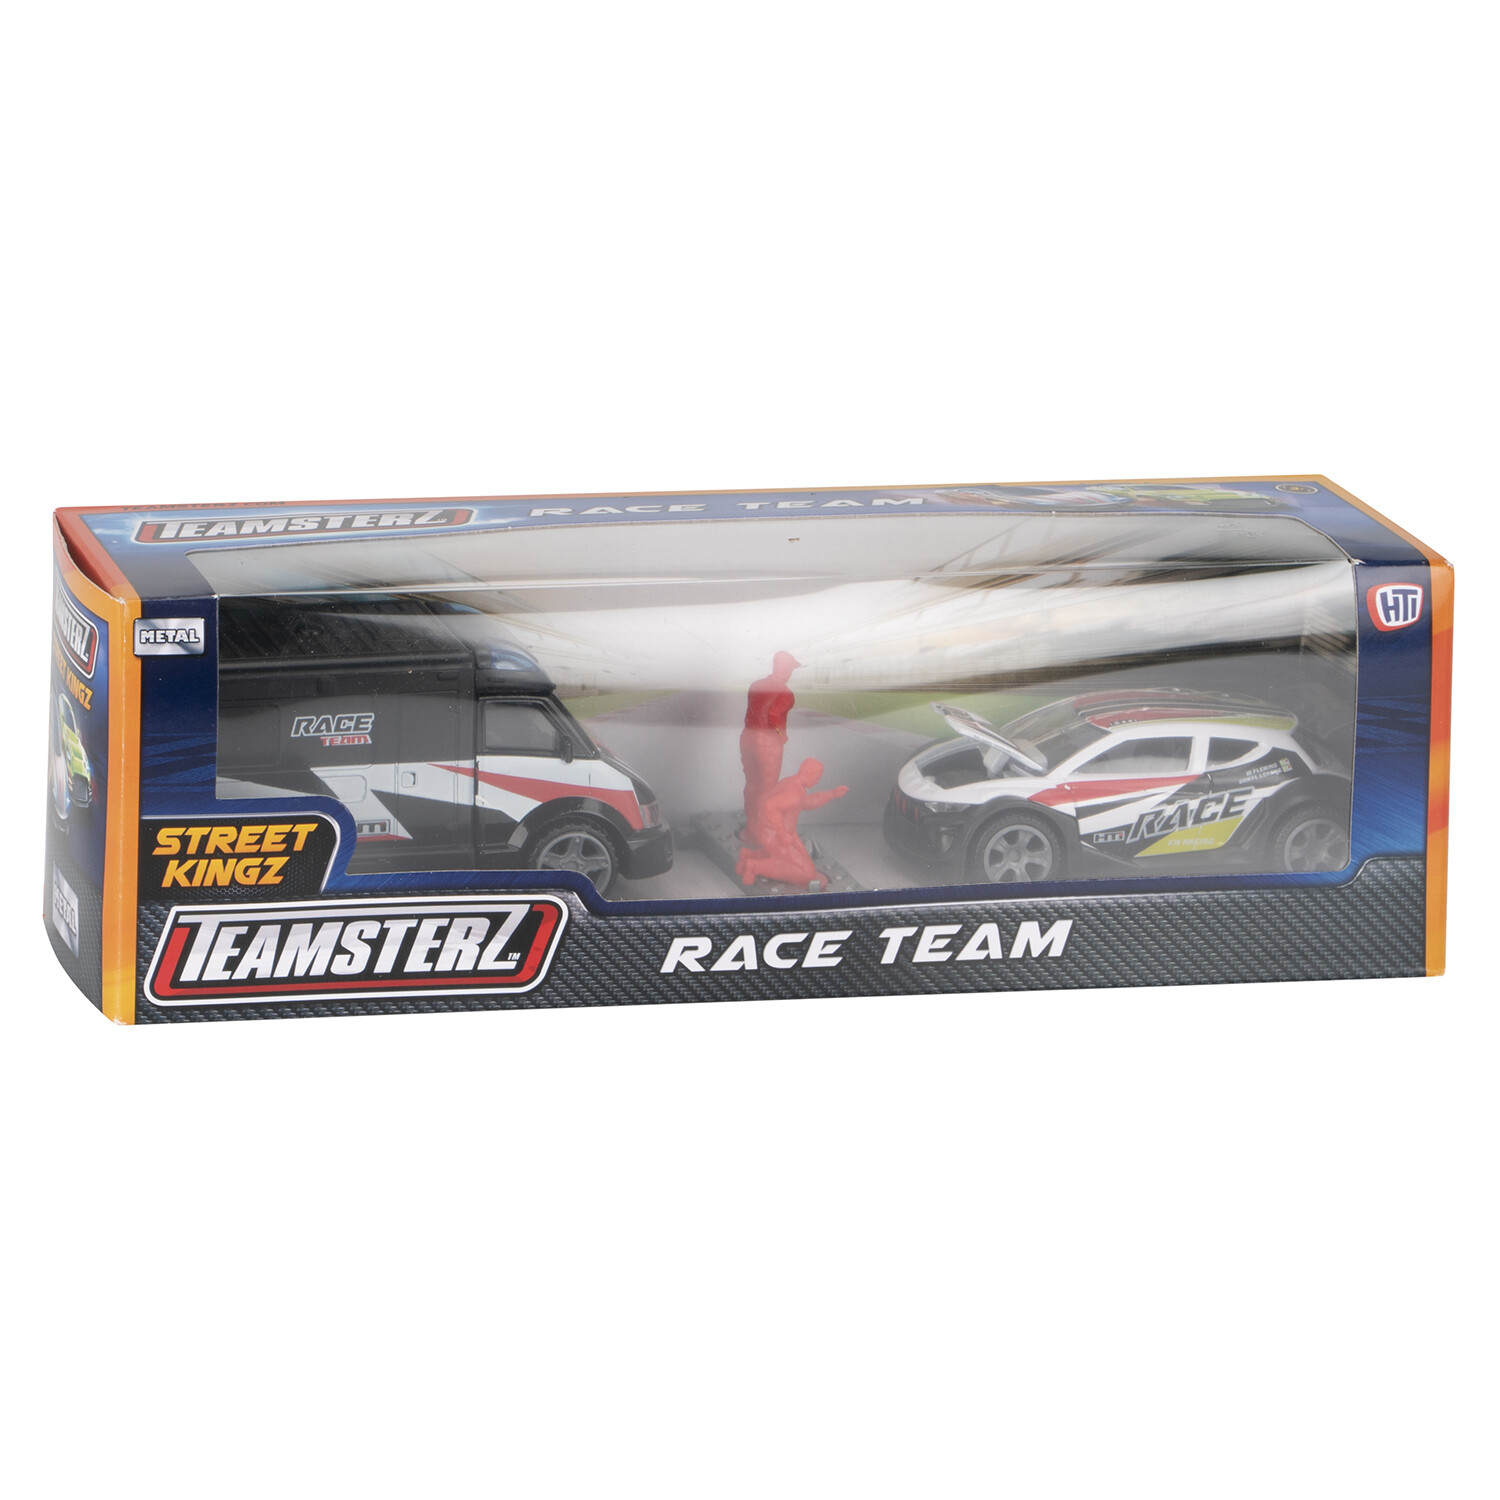 Single Teamsterz Street Kingz Race Team Playset in Asssorted styles Image 1